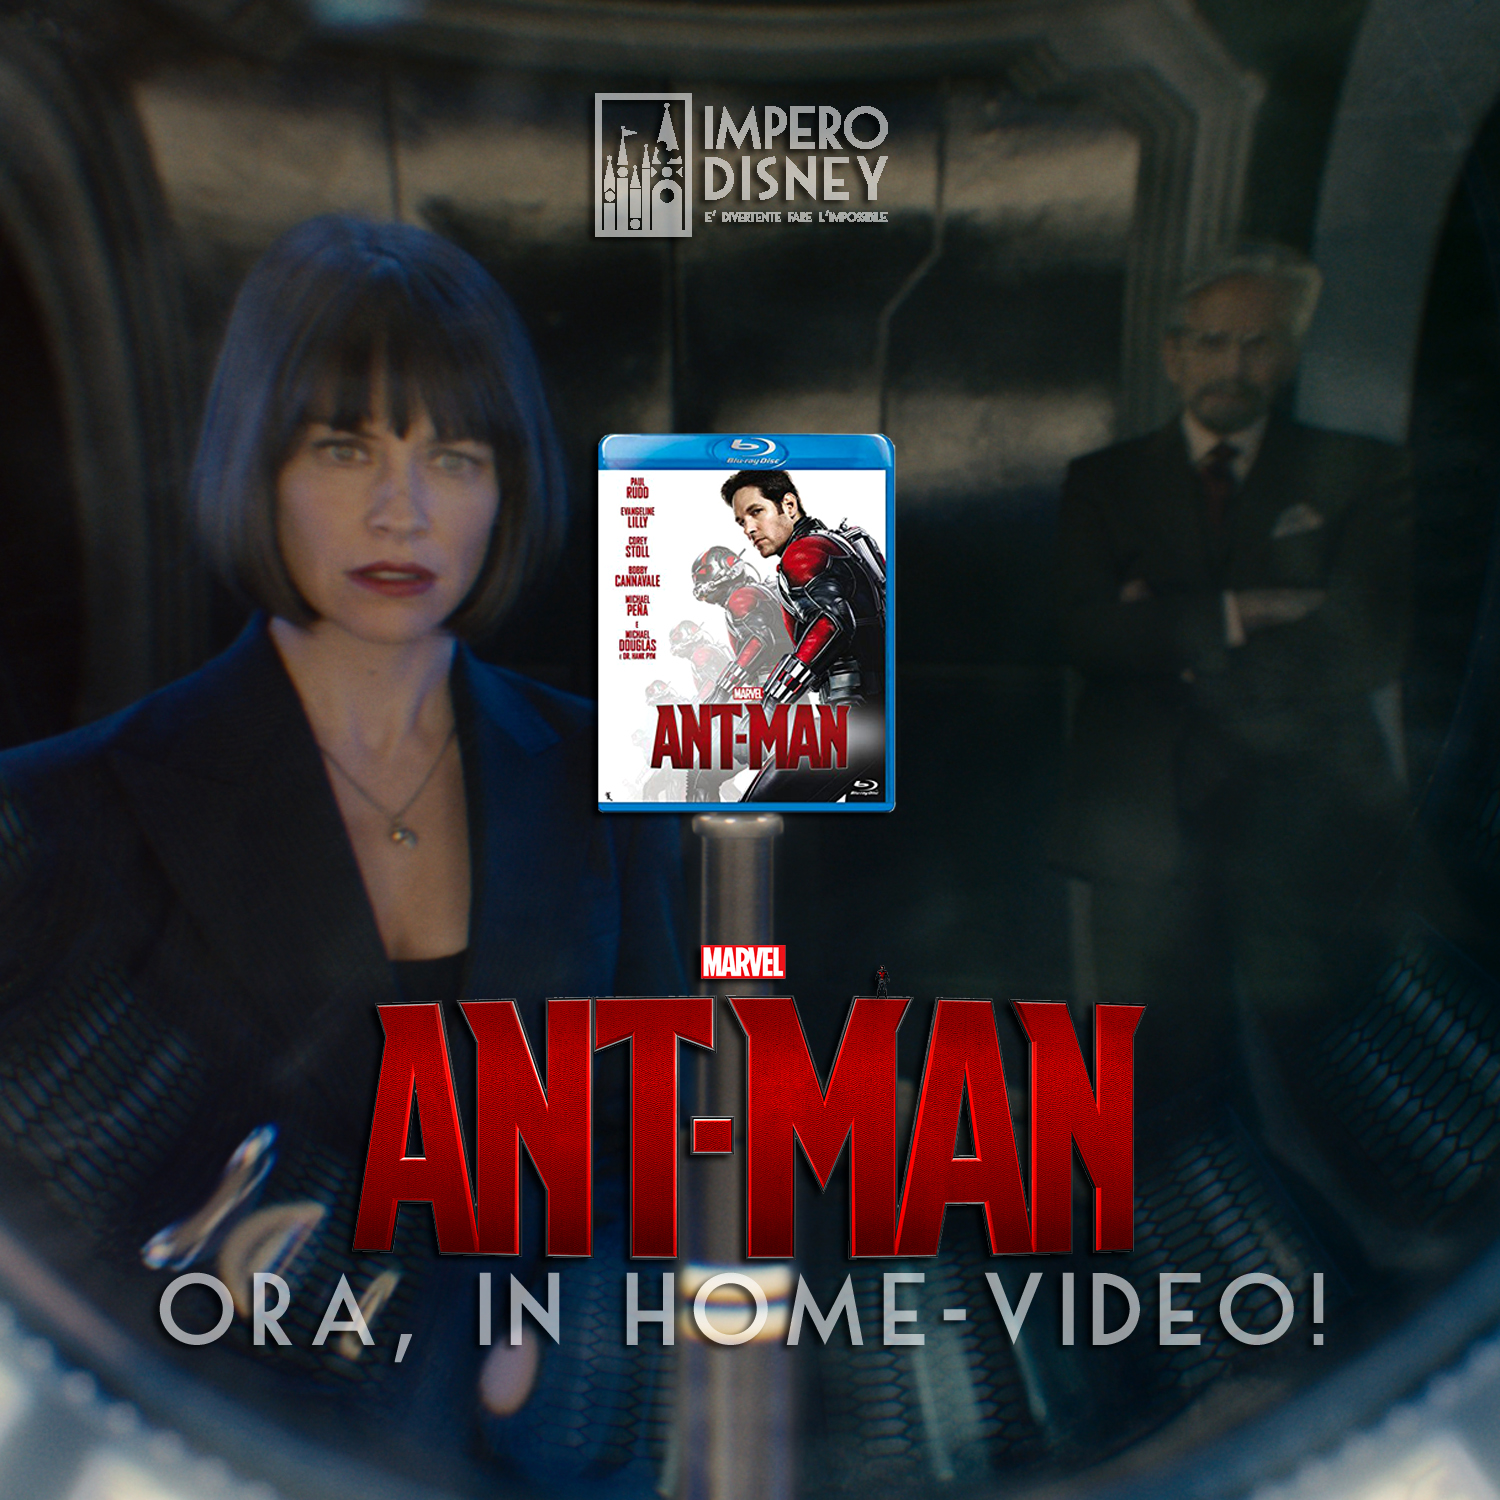 Ant-Man Home Video IMpero Disney Scritta Logo